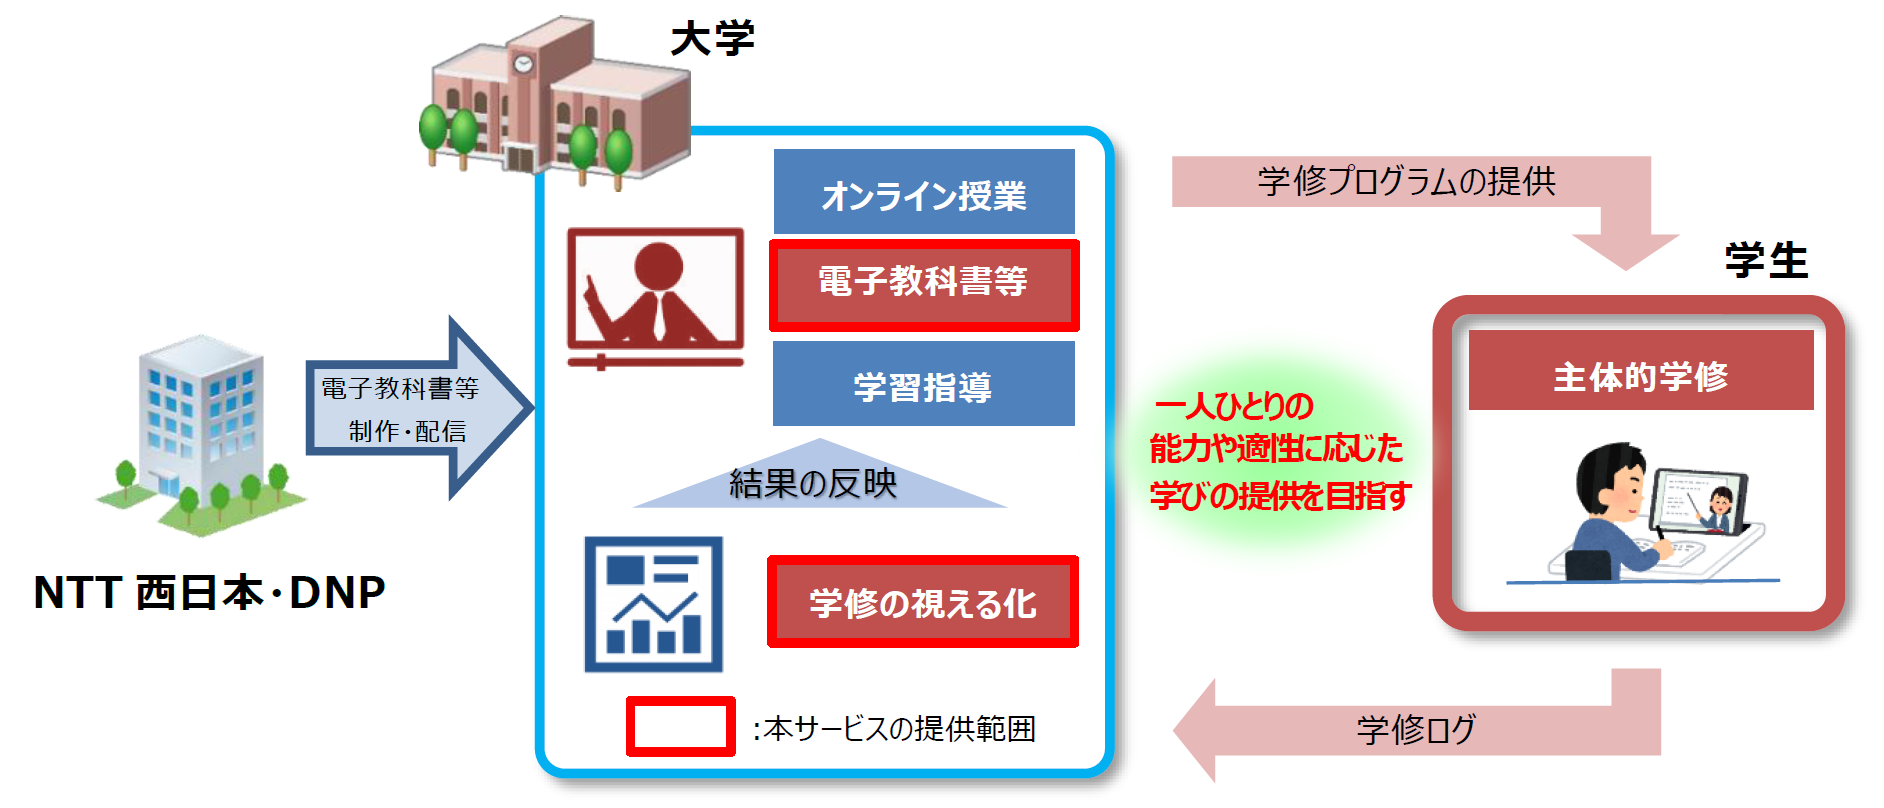 NTT西日本と大日本印刷 共同で教育ICTプラットフォームを提供 ニュース DNP 大日本印刷